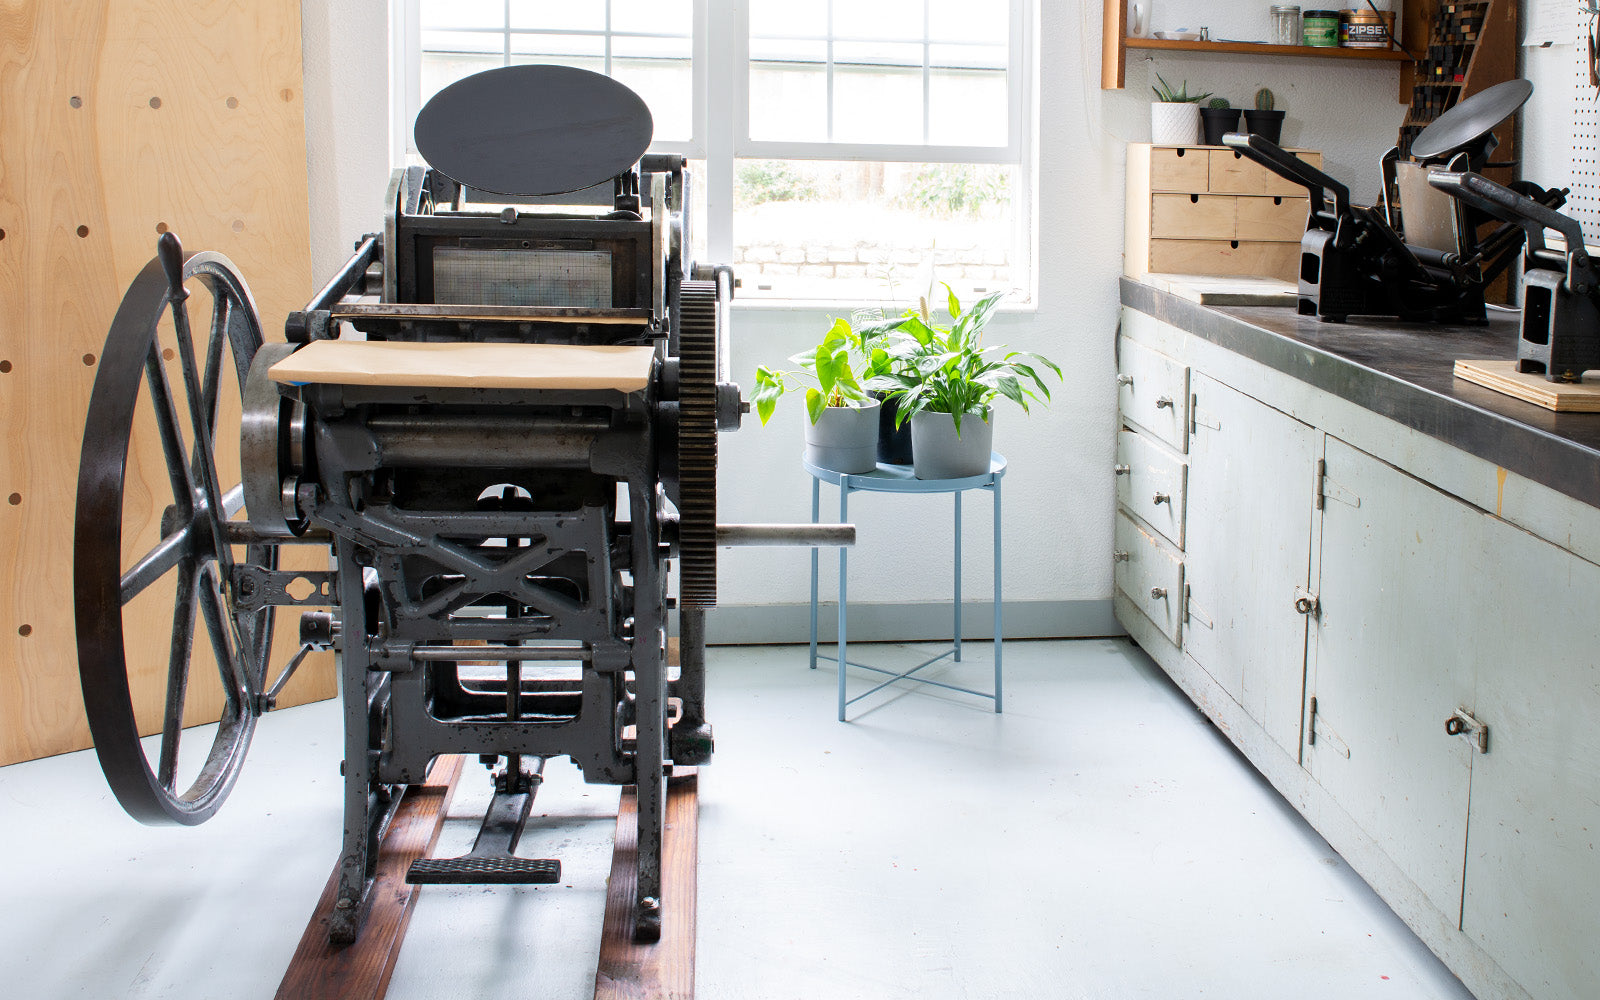 Antique printing presses in a letterpress studio